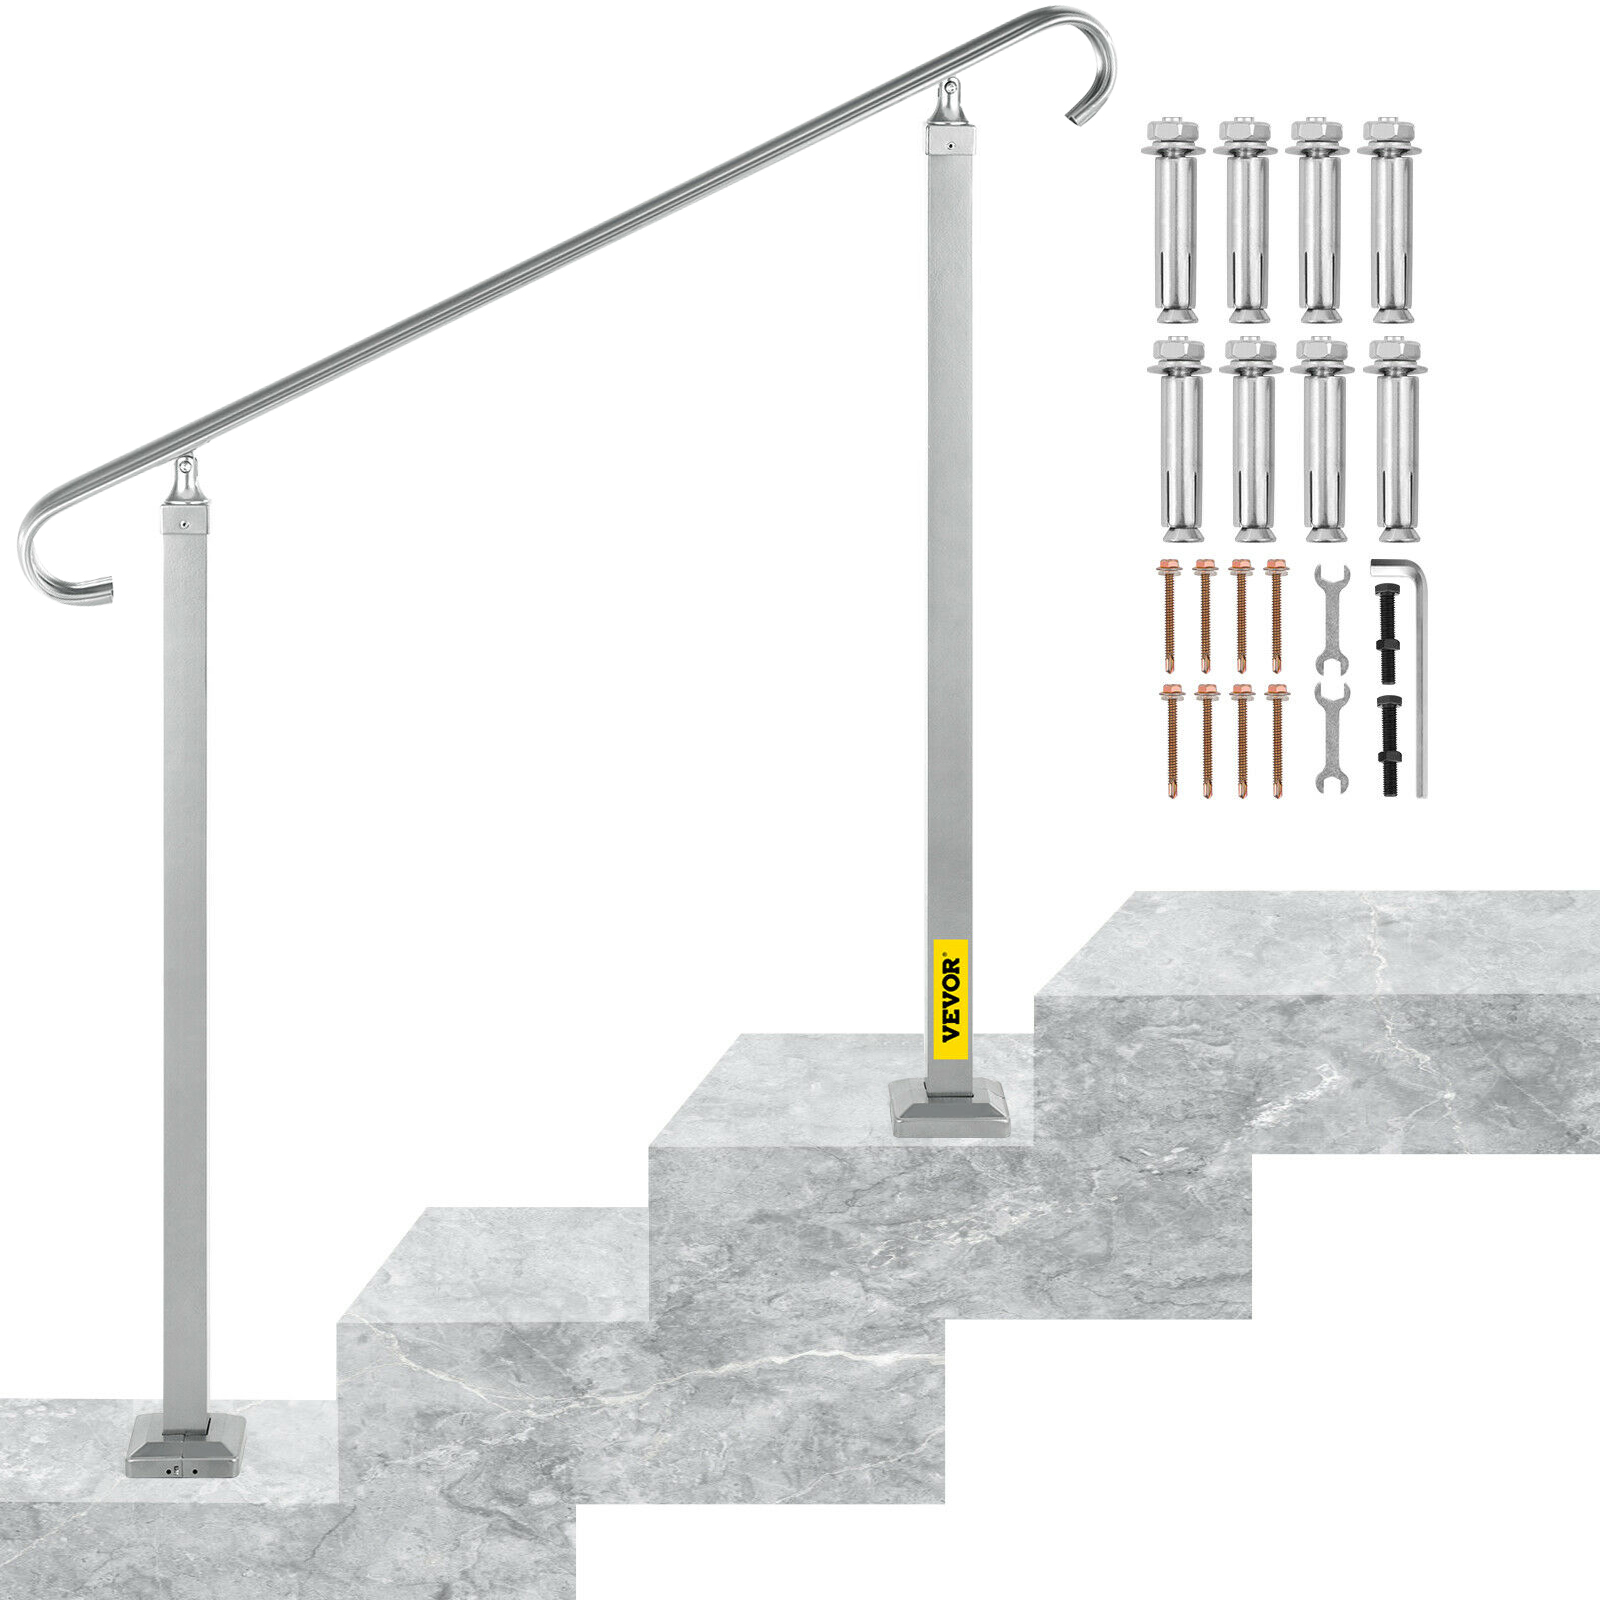 Pasamanos para escaleras de metal negro – Kit completo, barandilla  pasamanos escaleras diseño de tubo de agua para interiores y exteriores,  barandilla